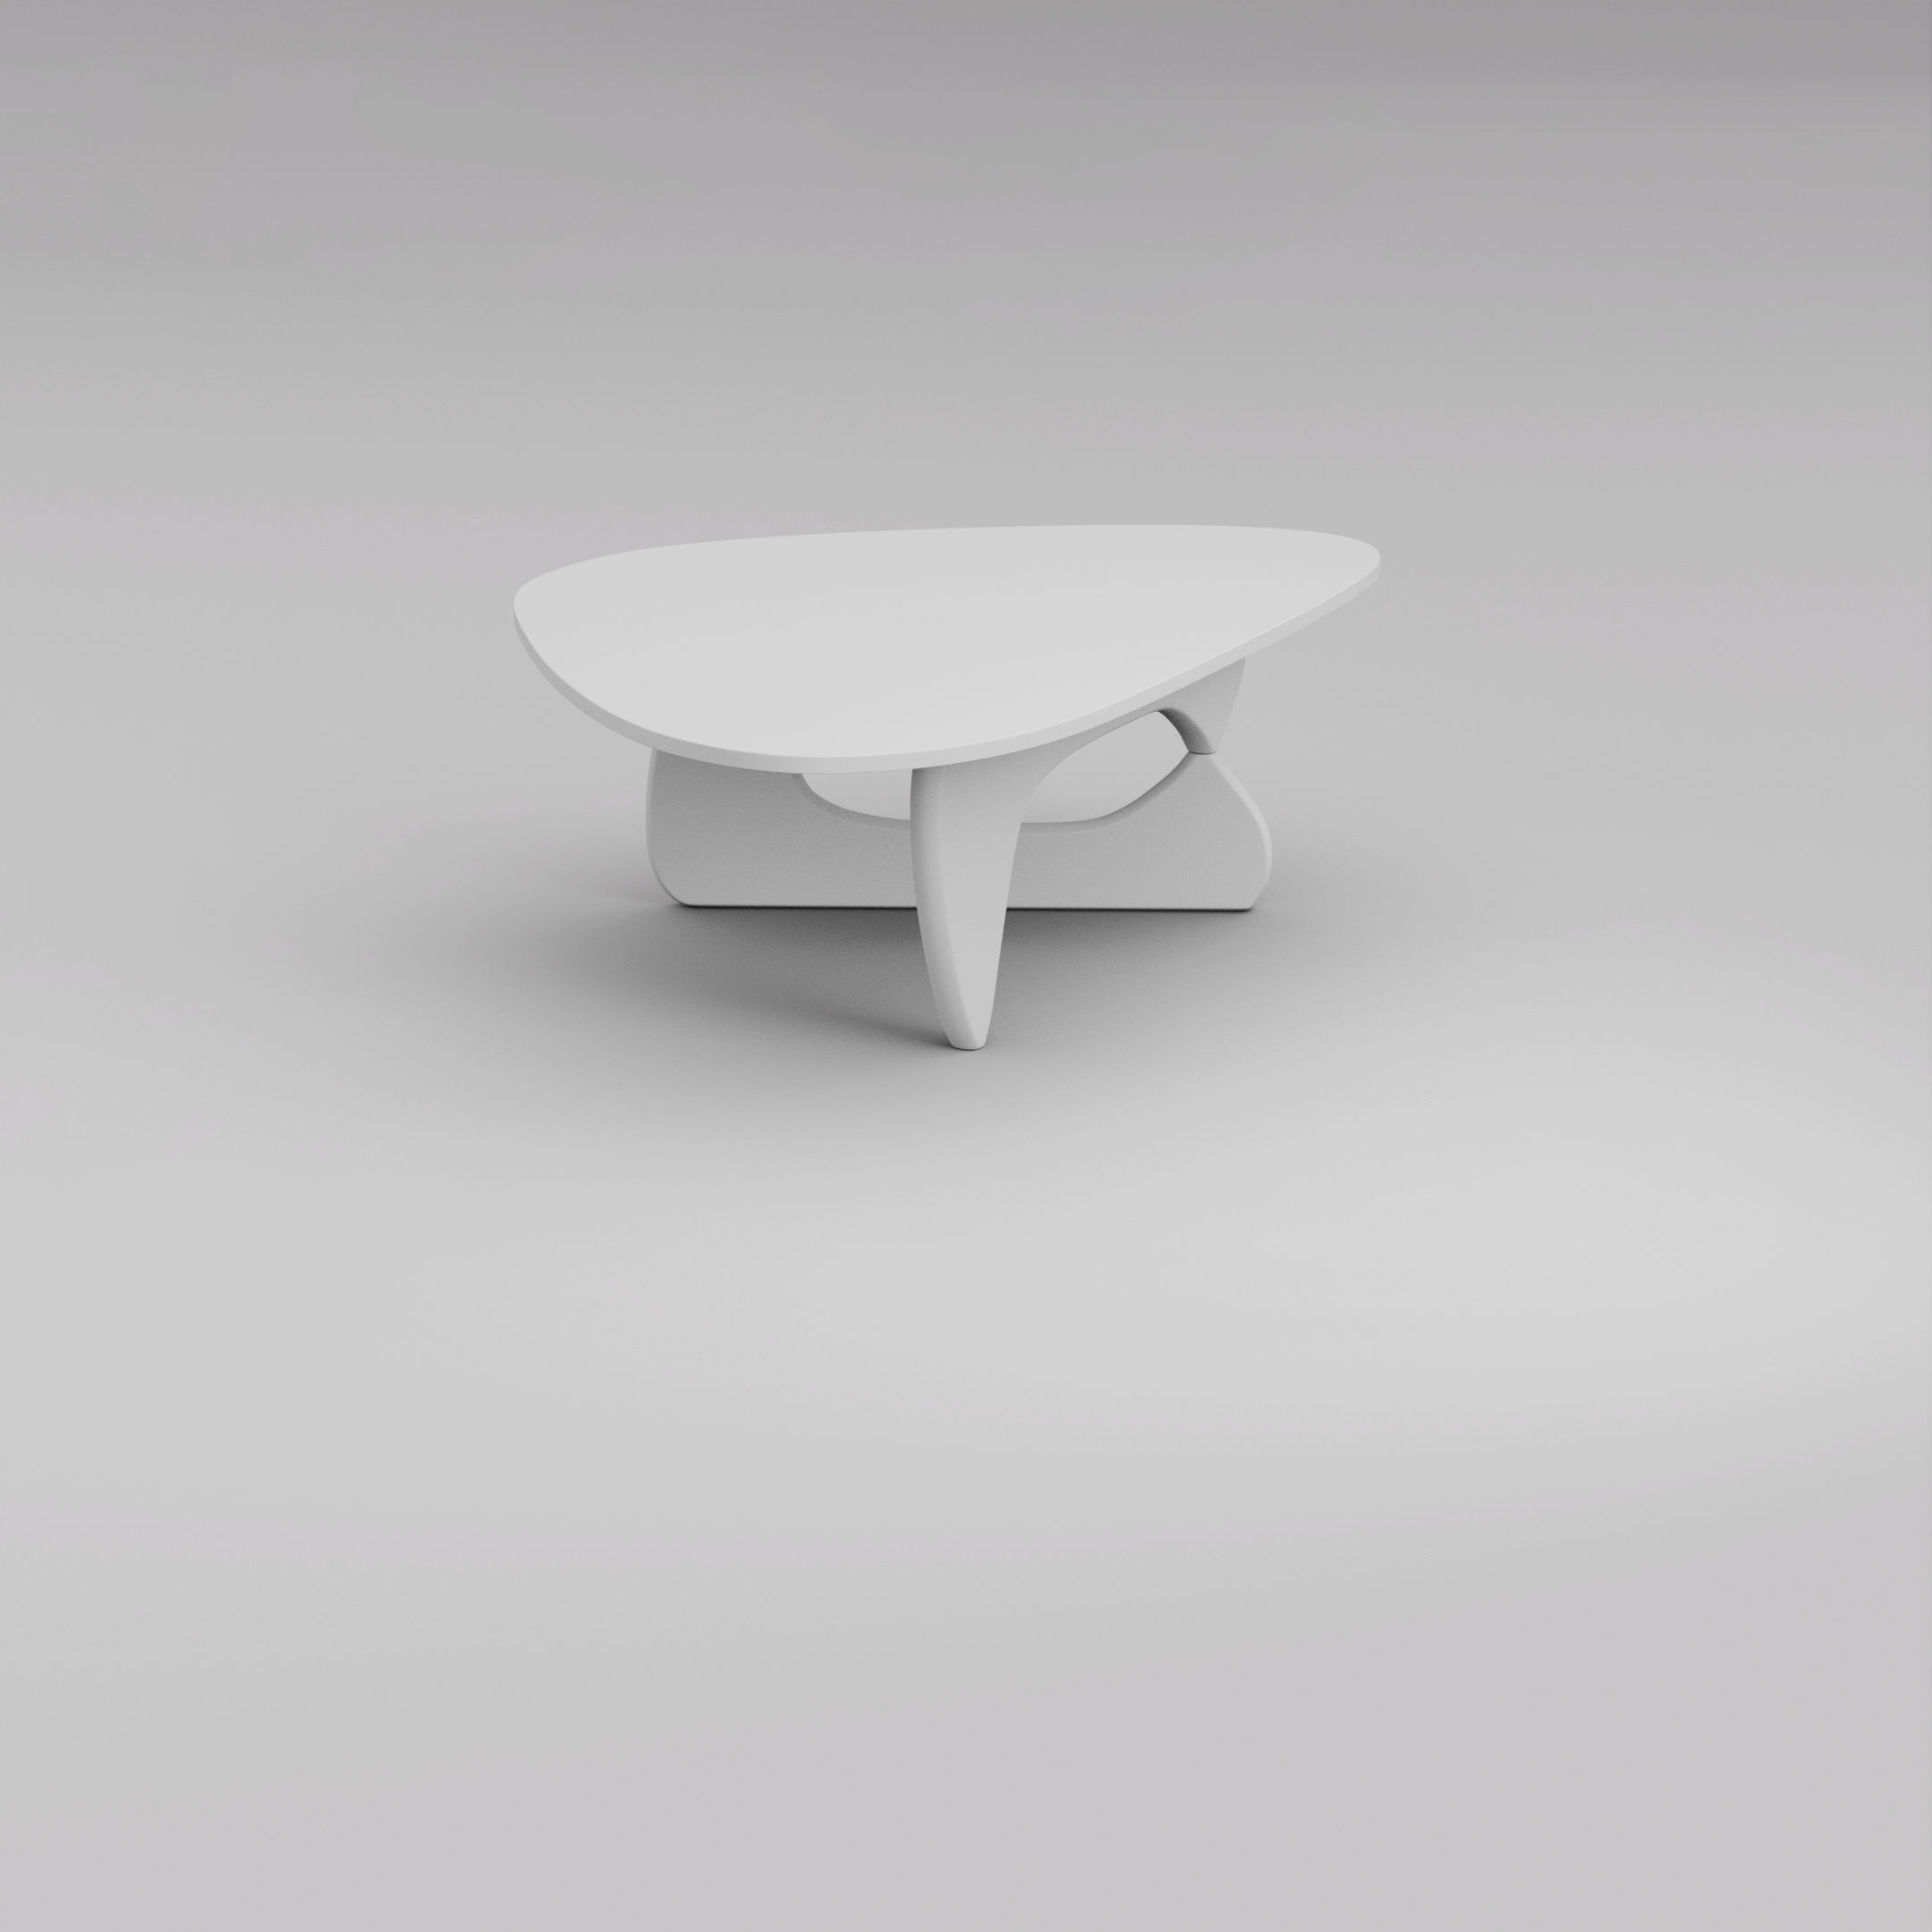 14 Noguchi Table Clay V2 - Noguchi Table CGI - Sonny Nguyen